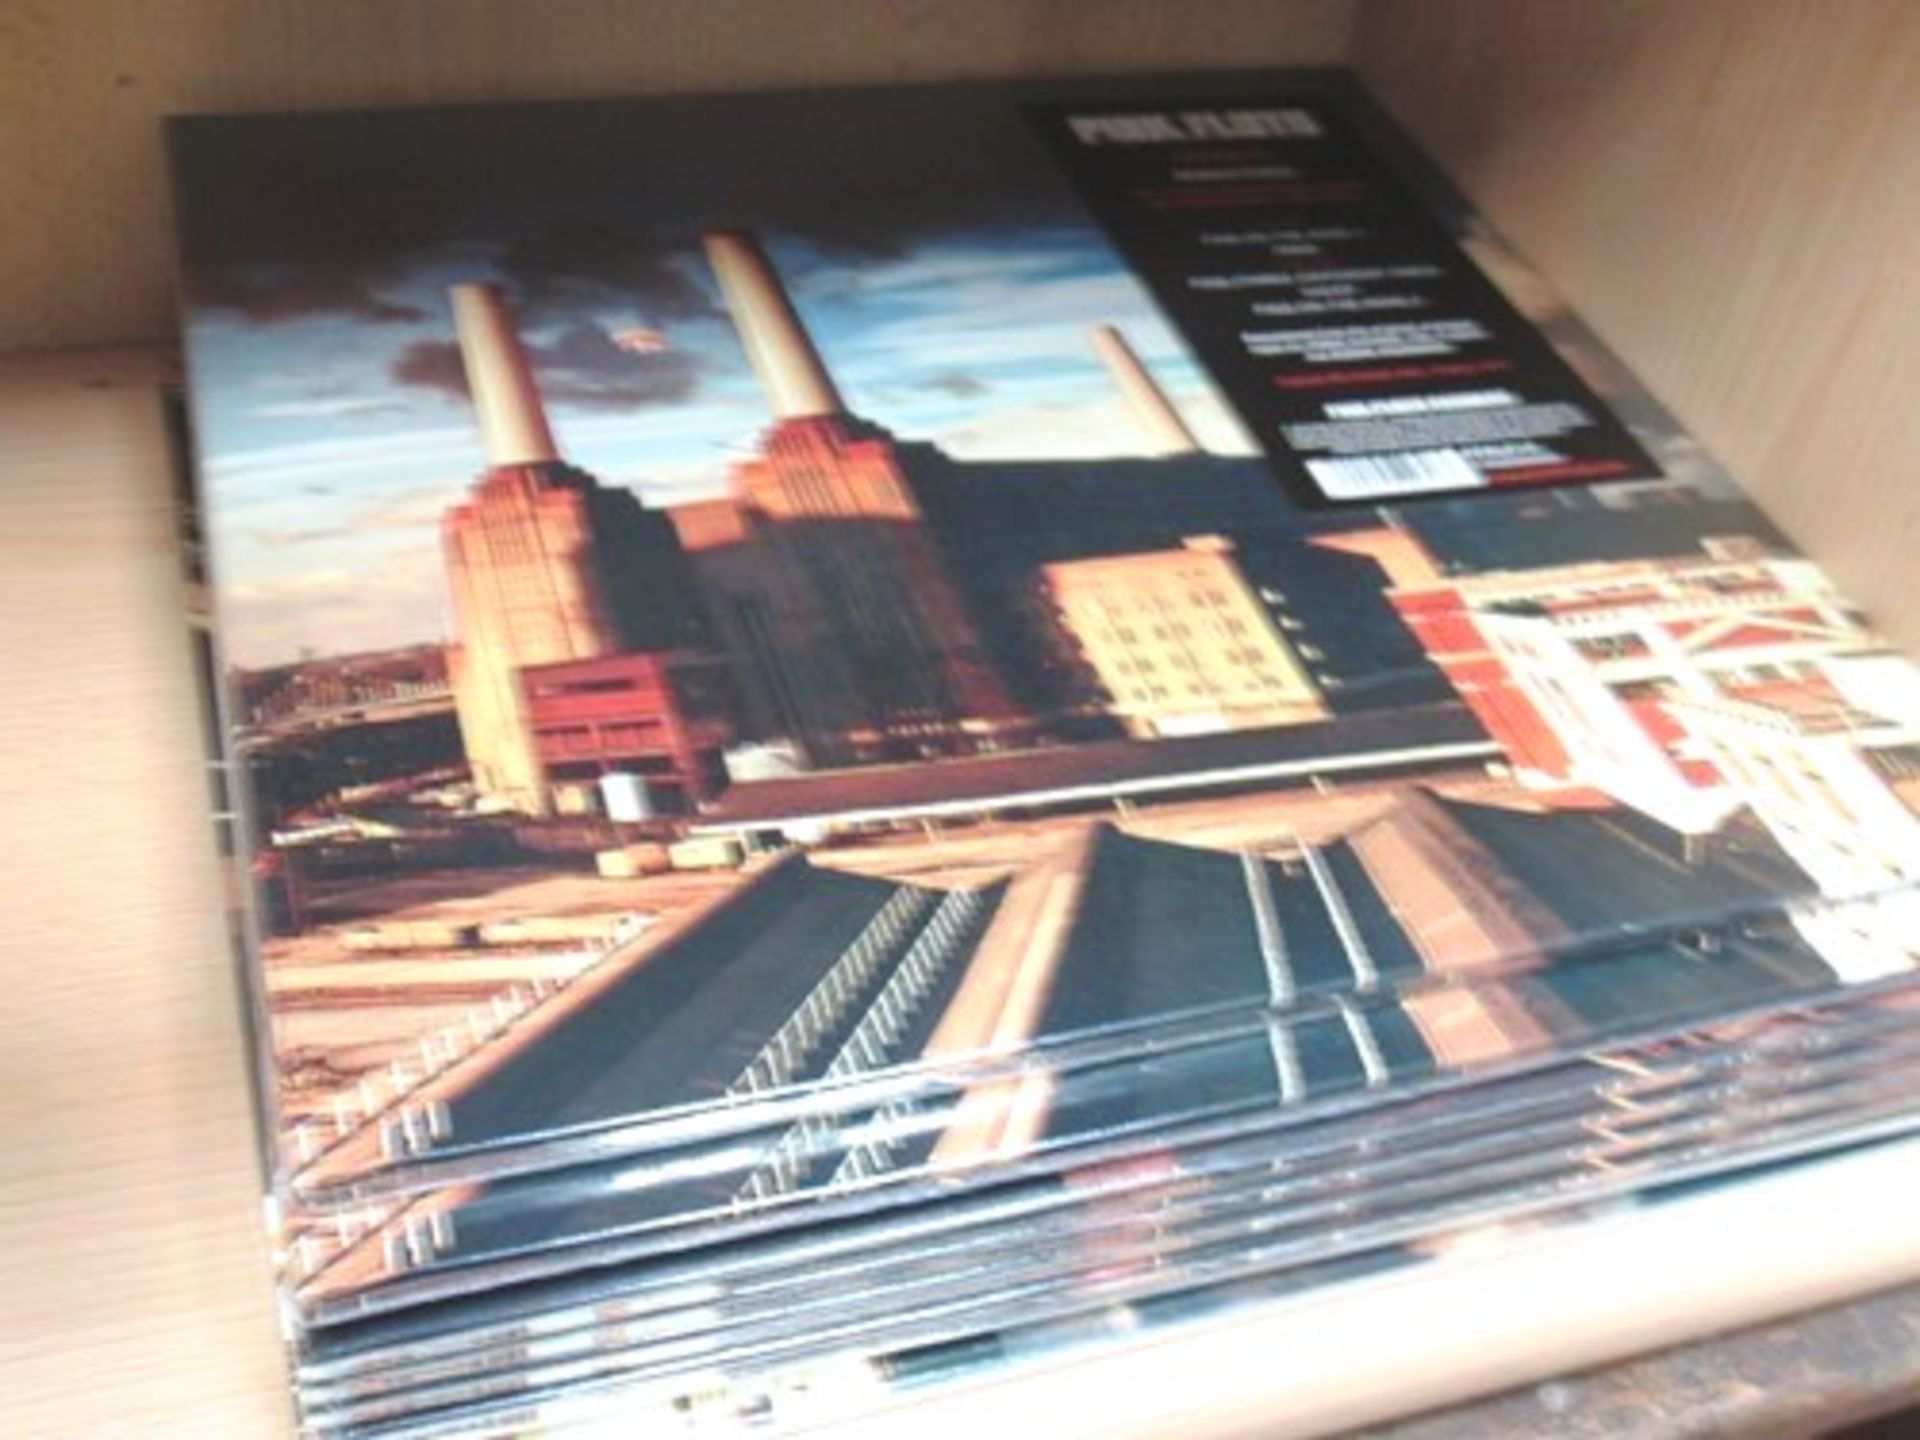 8 x Pink Floyd Animals Remastered vinyl's - New (vinyl shelf) - Image 2 of 2